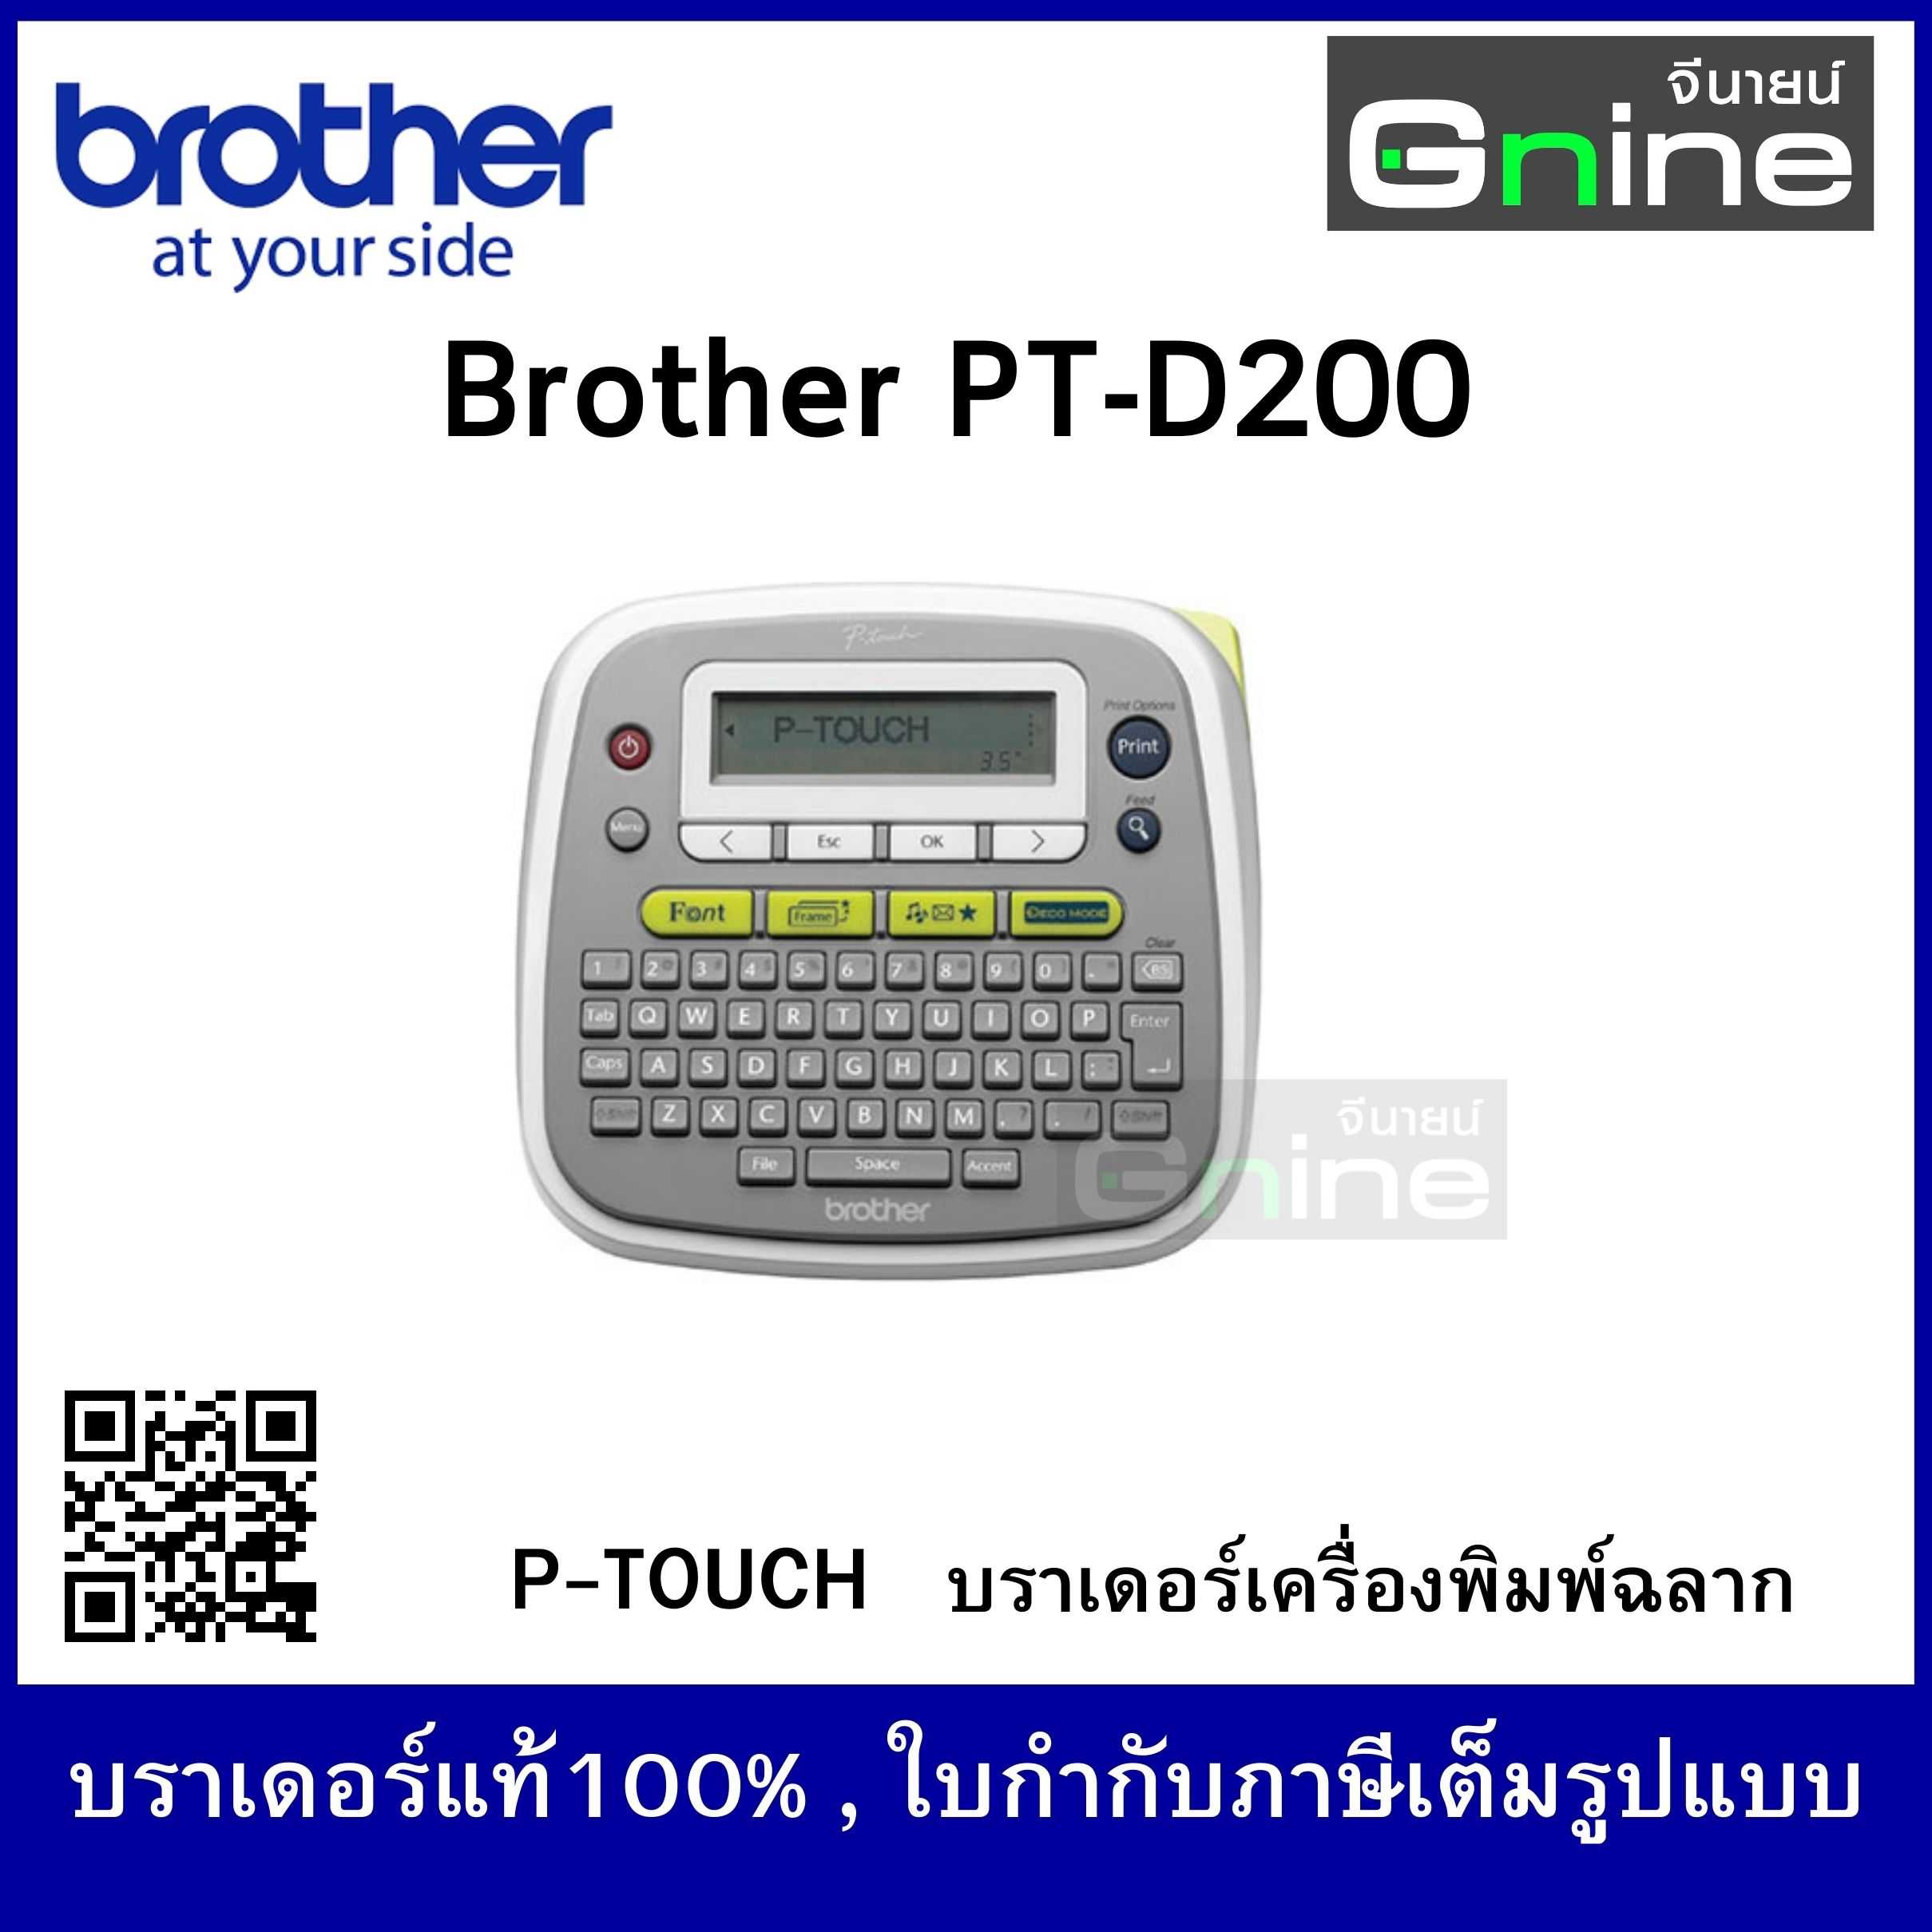 Brother P-TOUCH รุ่น PTD200 เครื่องพิมพ์ฉลาก บราเดอร์ พีทัช